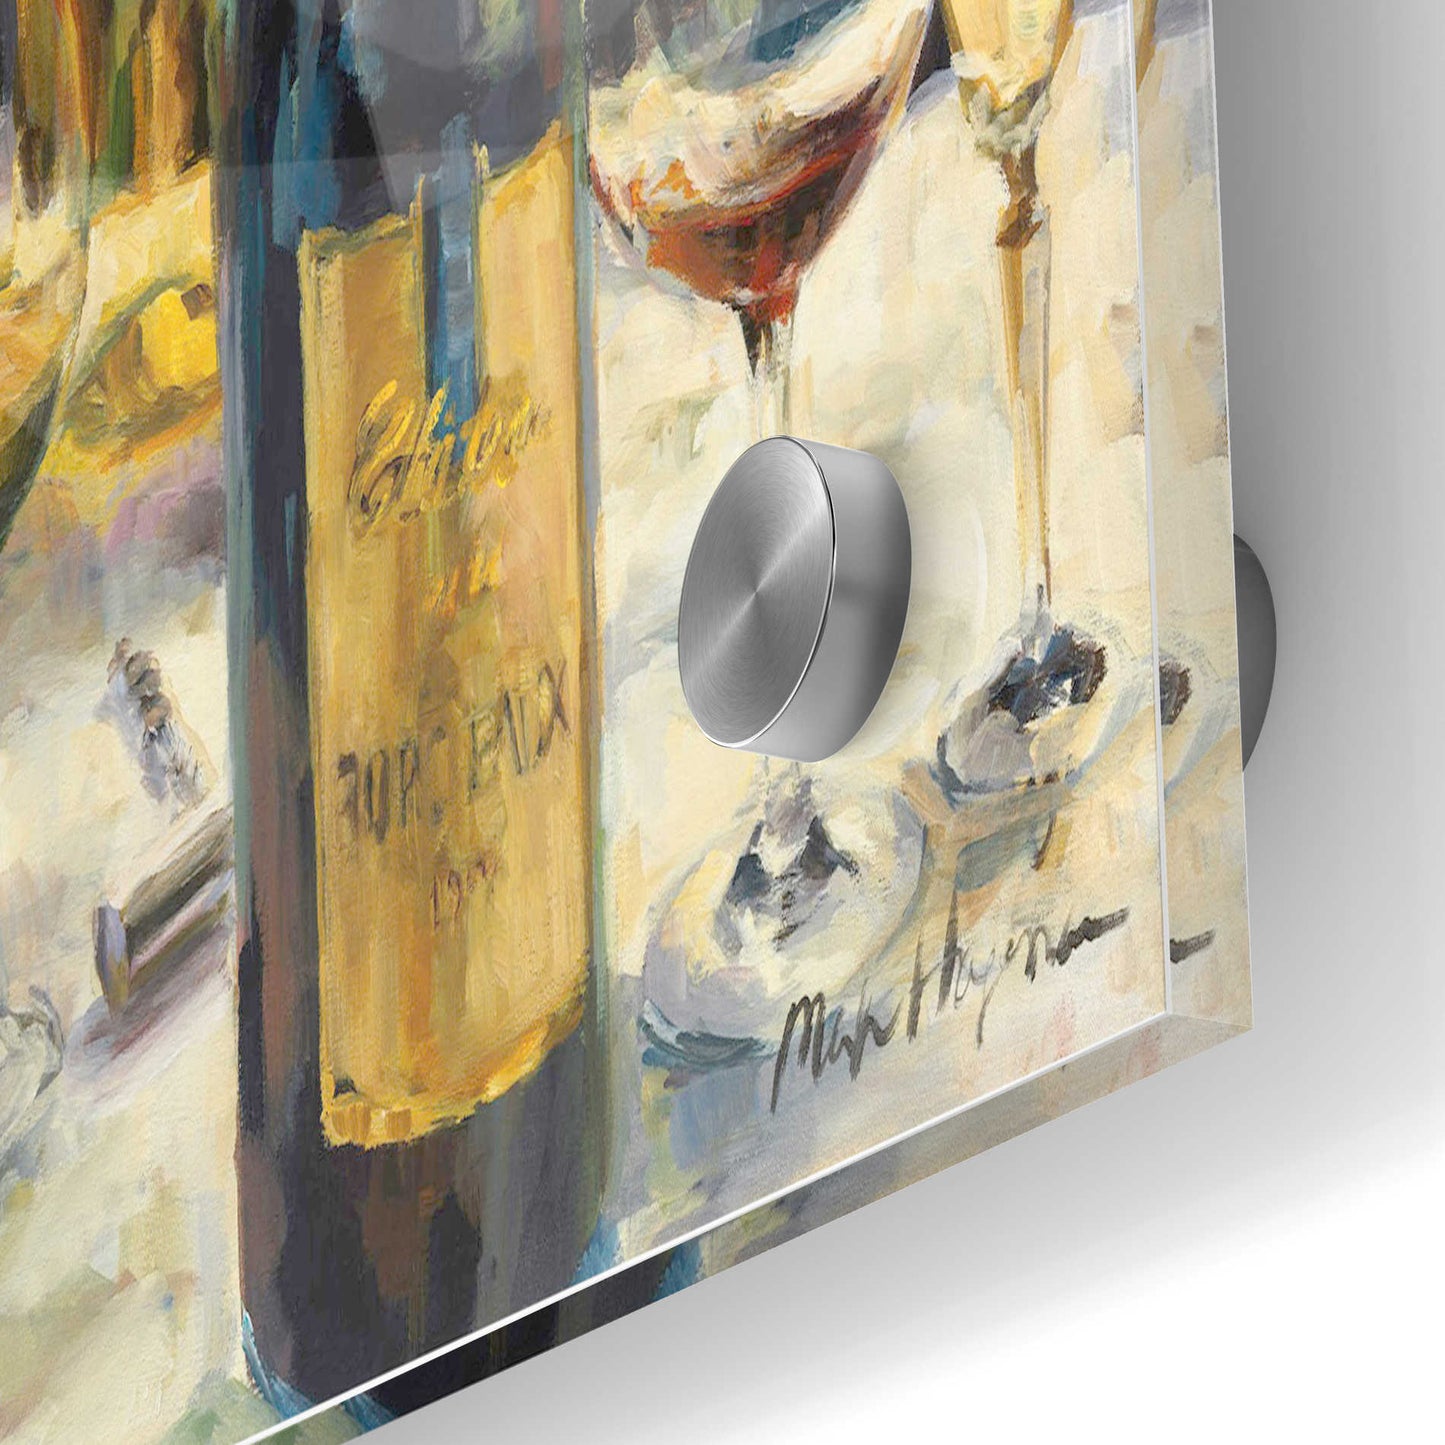 Epic Art 'Bordeaux and Muscat' by Marilyn Hageman, Acrylic Glass Wall Art,24x36